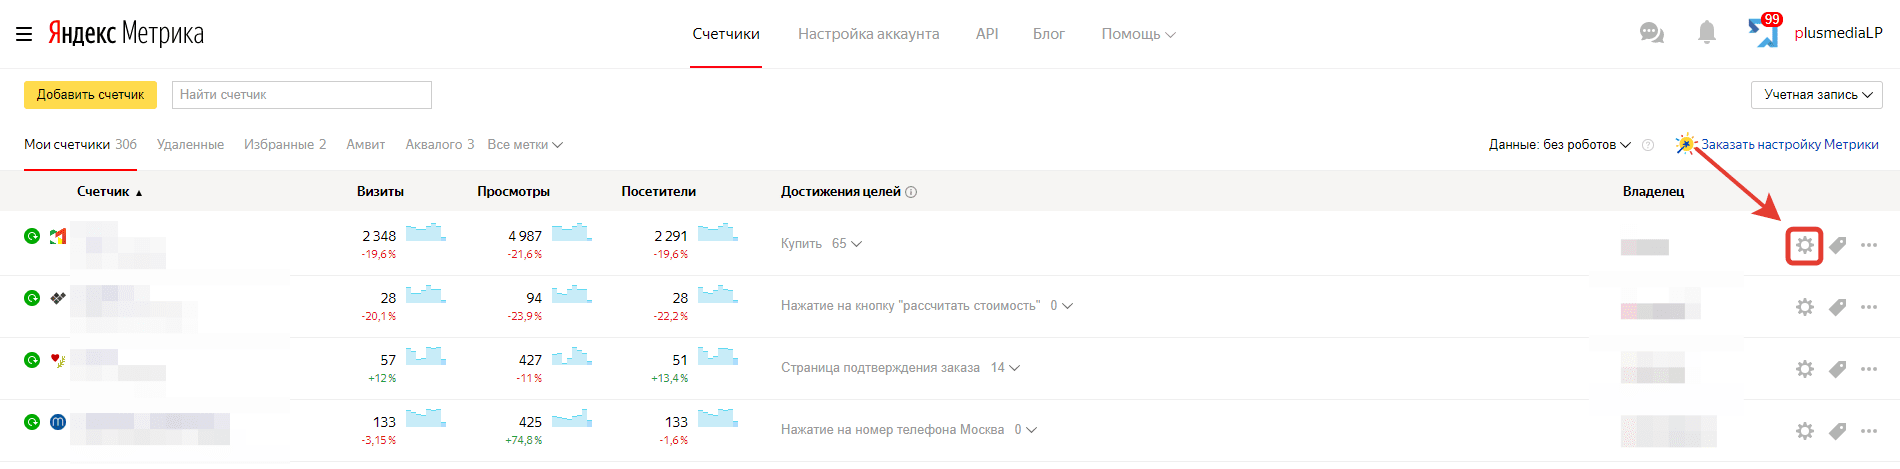 Счетчики в Яндекс Метрике